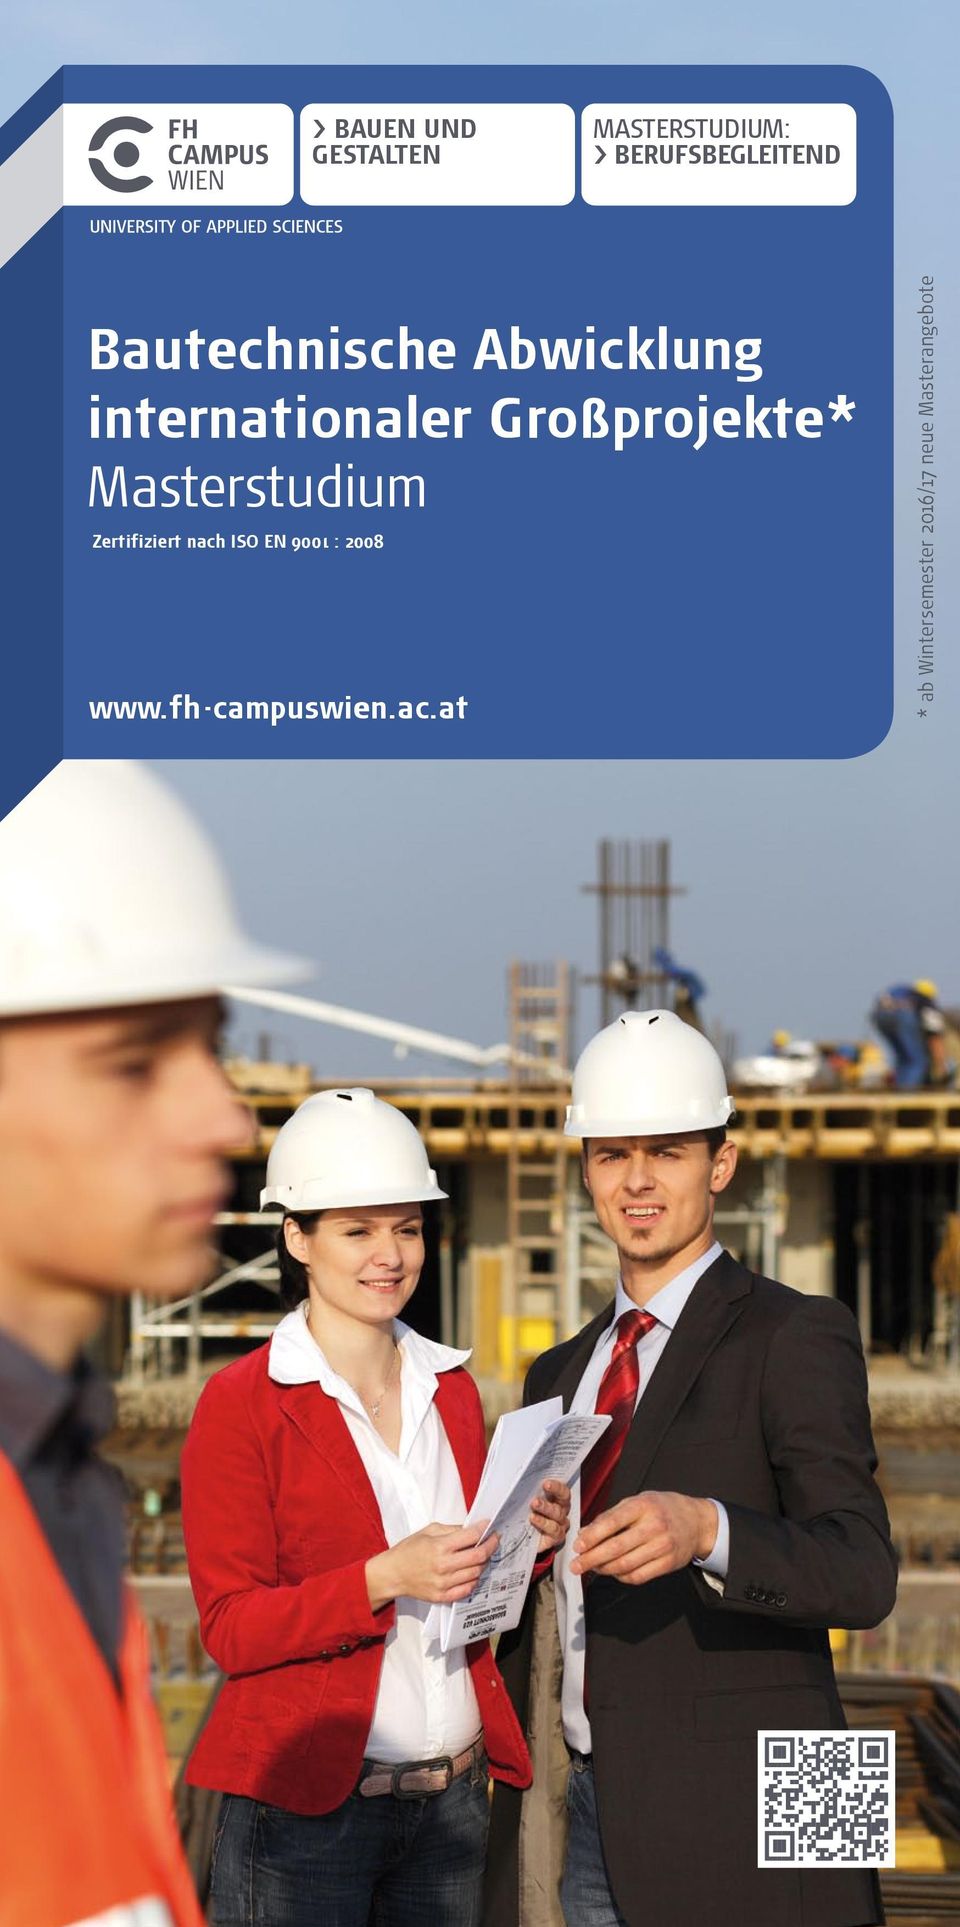 Masterstudium Zertifiziert nach ISO EN 9001 : 2008 www.